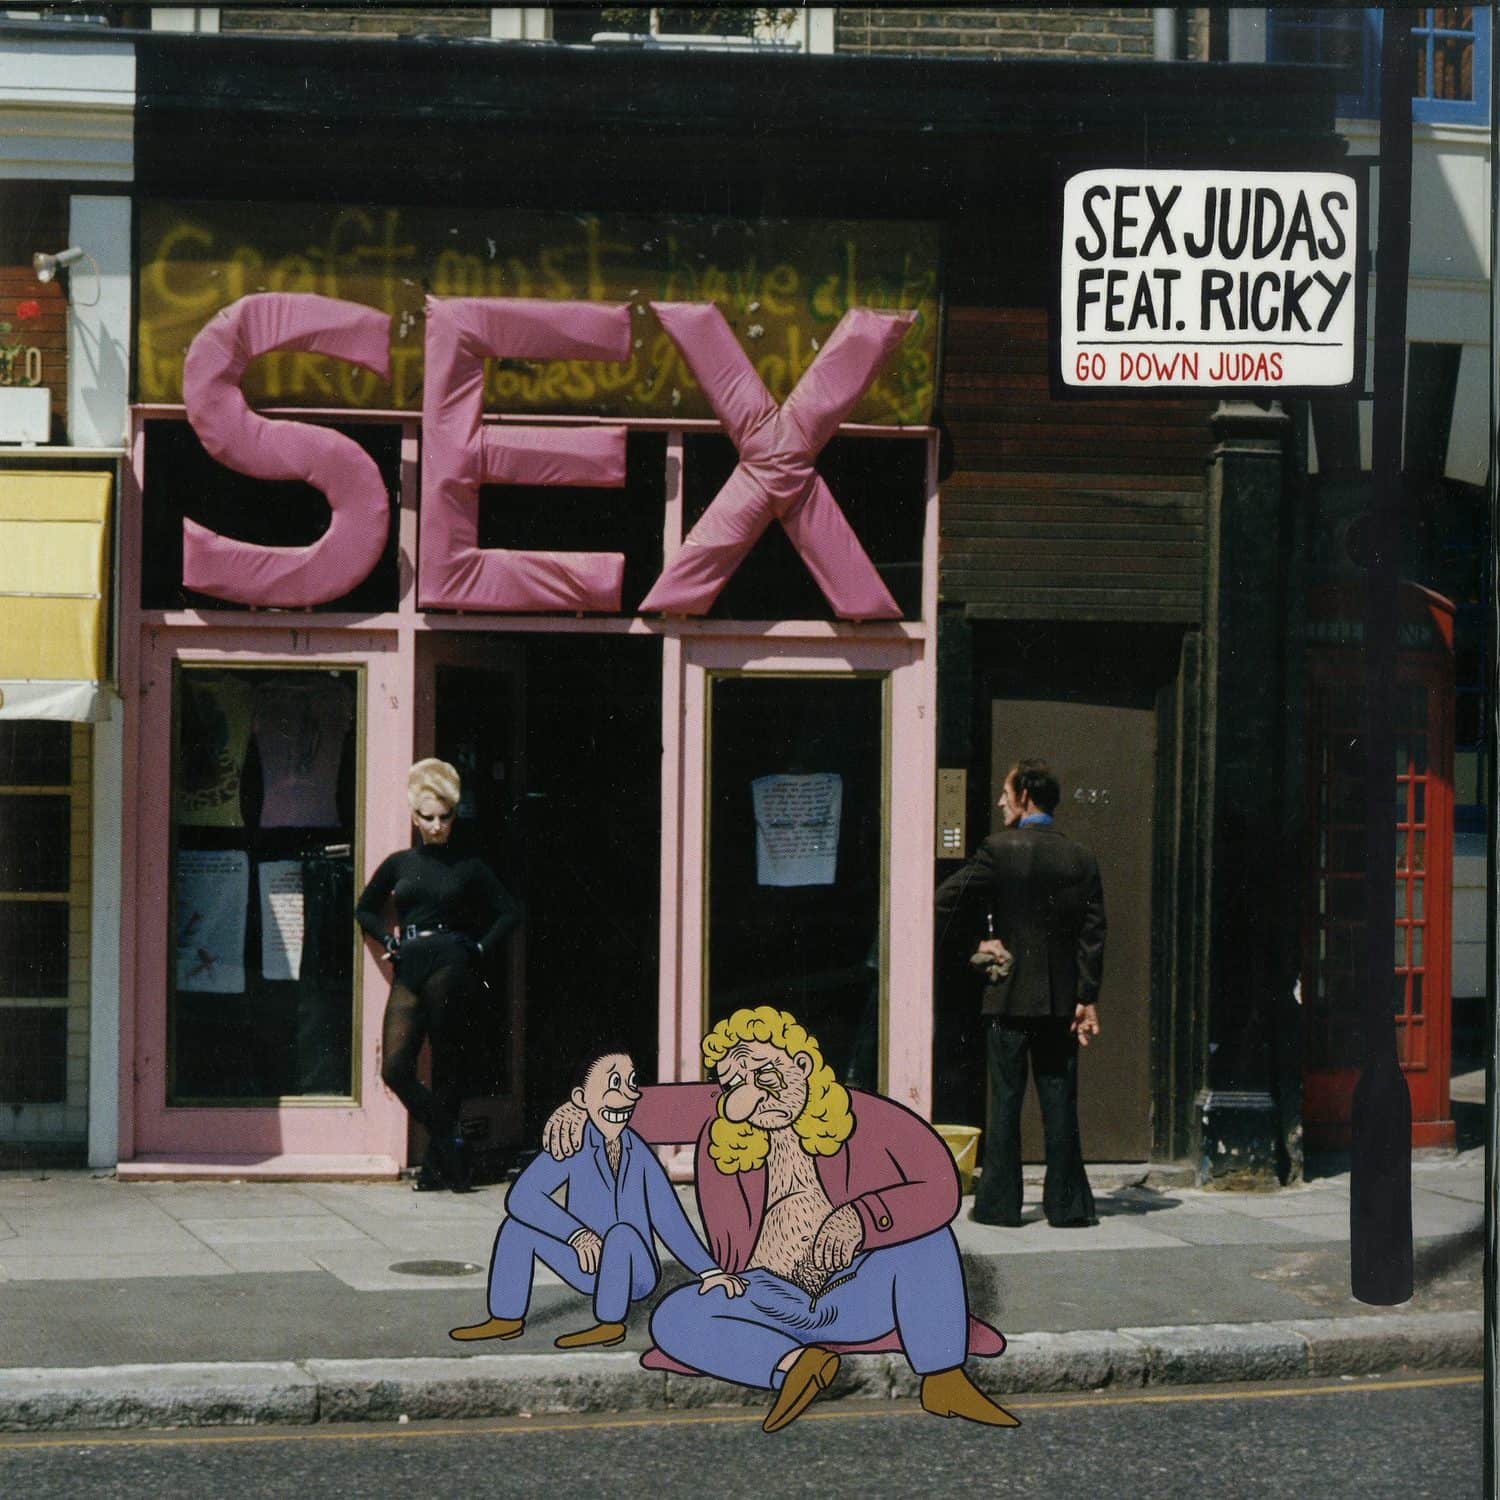 Sex Judas Feat. Ricky - GO DOWN JUDAS 